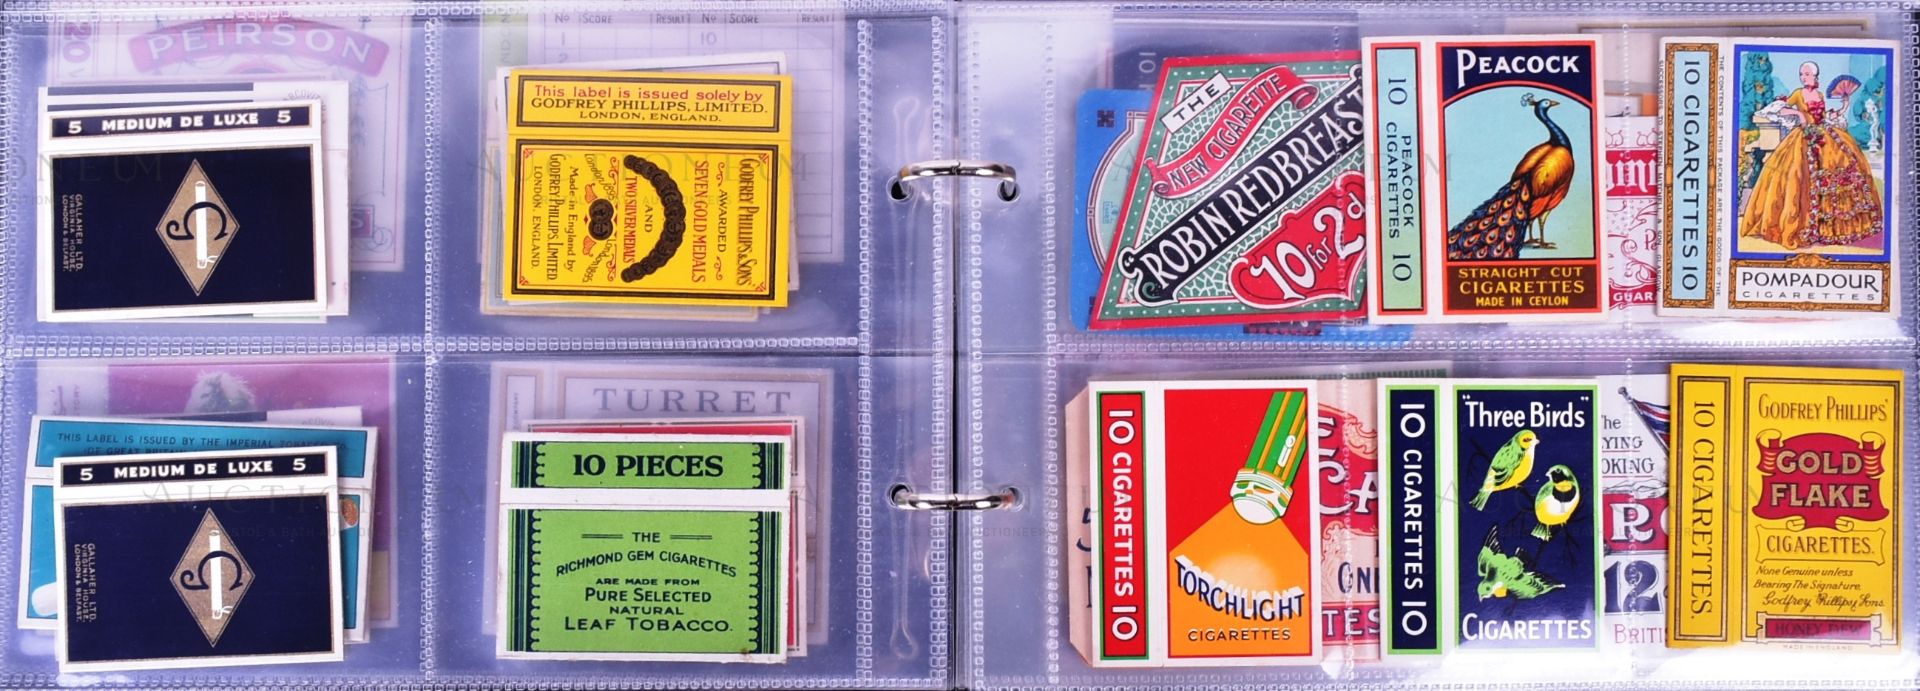 CIGARETTE PACKETS - ALBUM OF VINTAGE CIGARETTE PACKS - Image 7 of 16